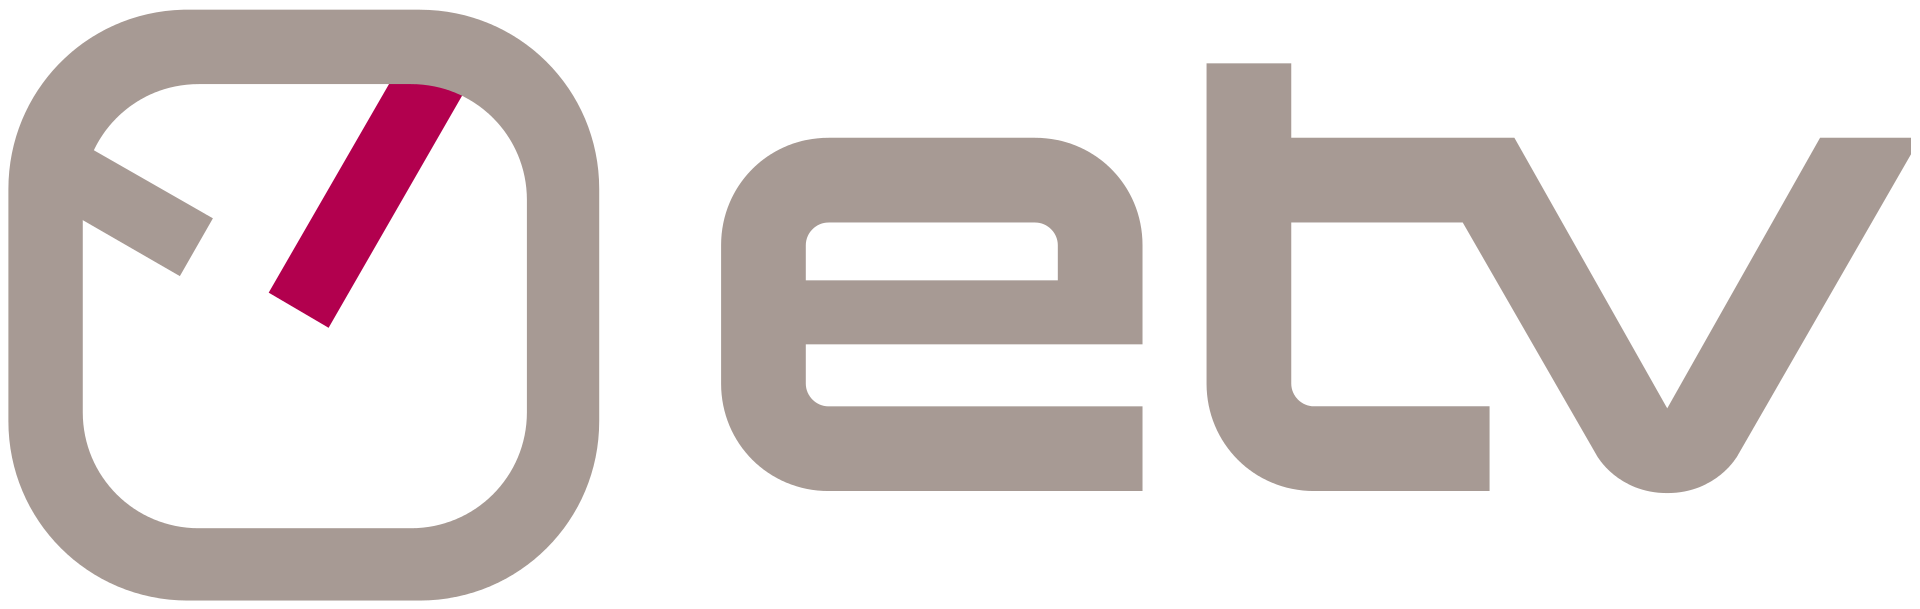 Etv.8.com go logo 2018-Present by KlaskyCsupoYesCaillo on DeviantArt